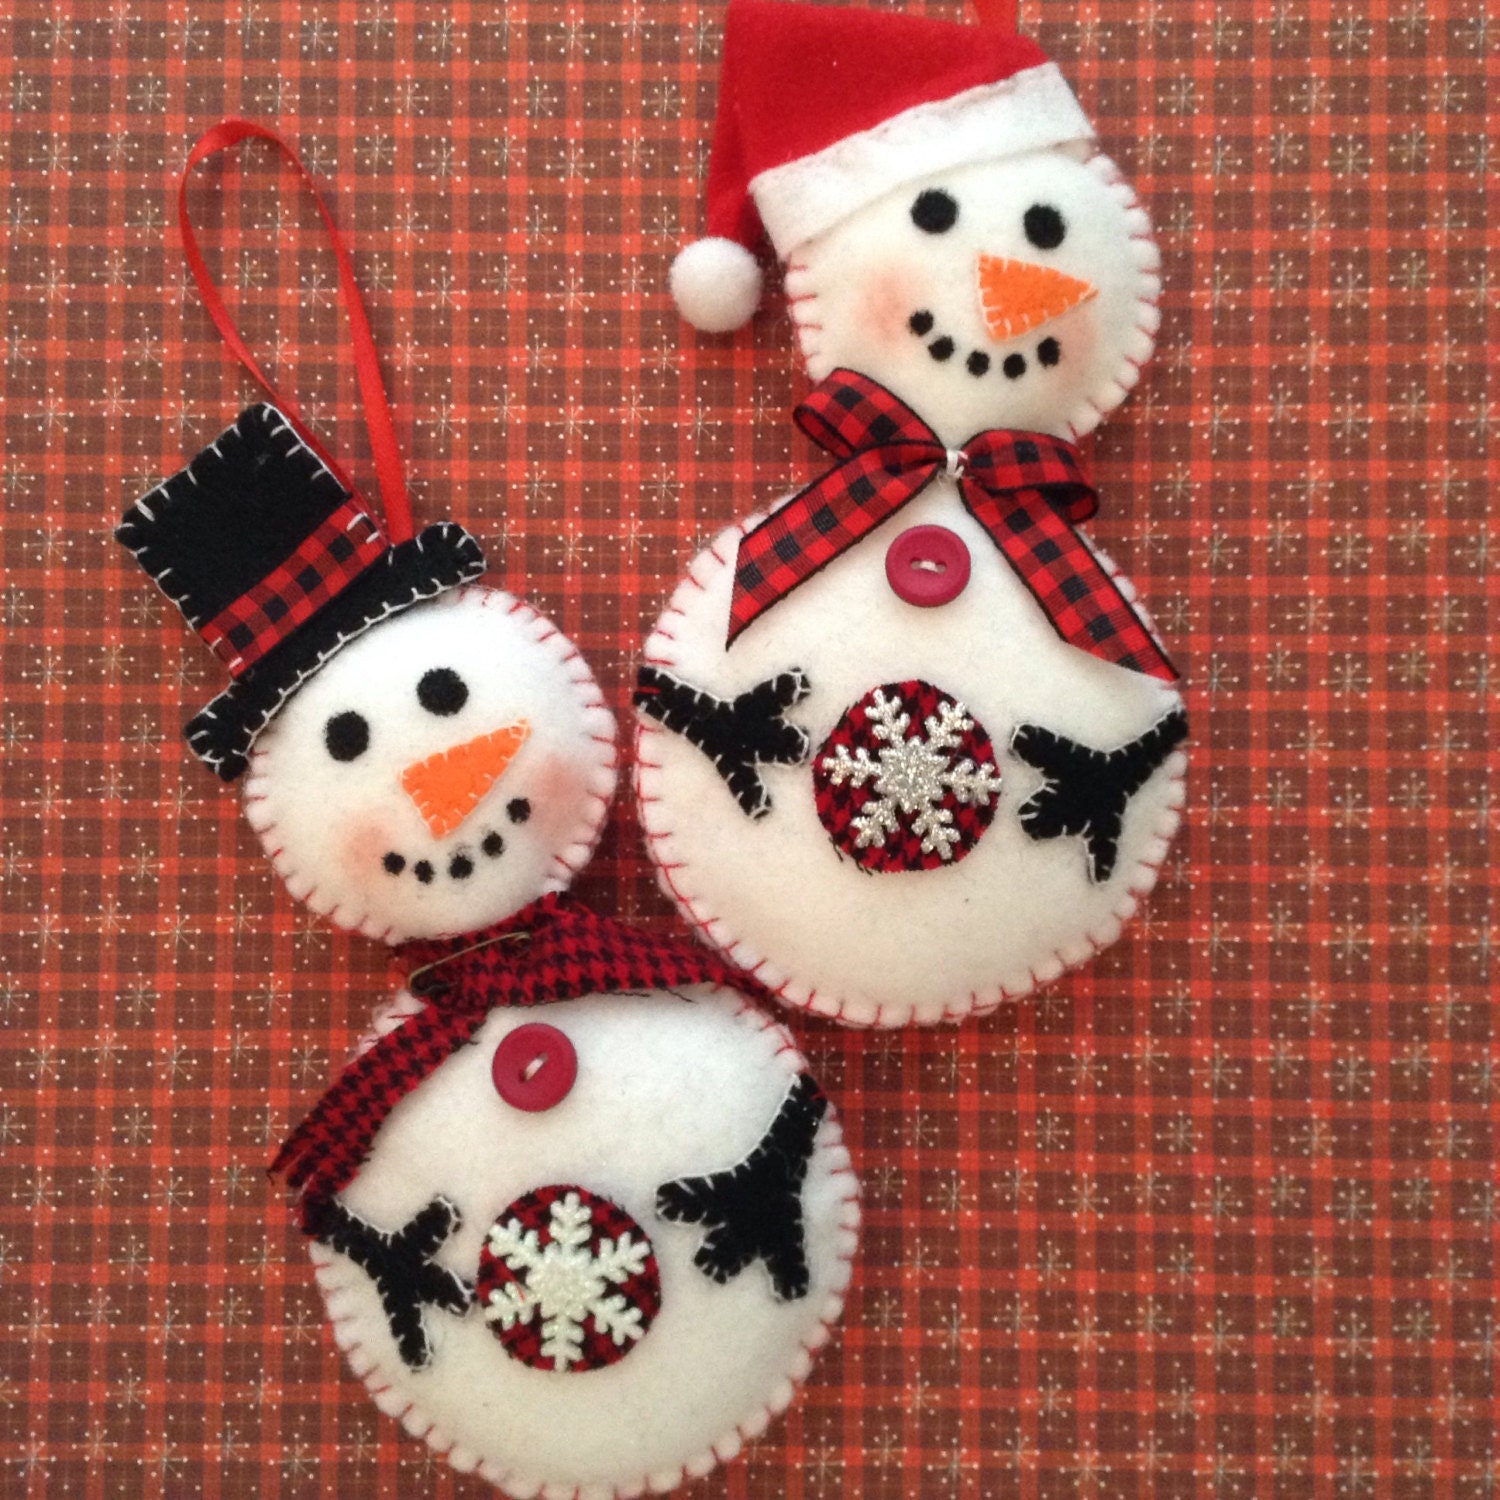 Snowman Ornaments / Christmas Felt Snowman Ornaments / Set of